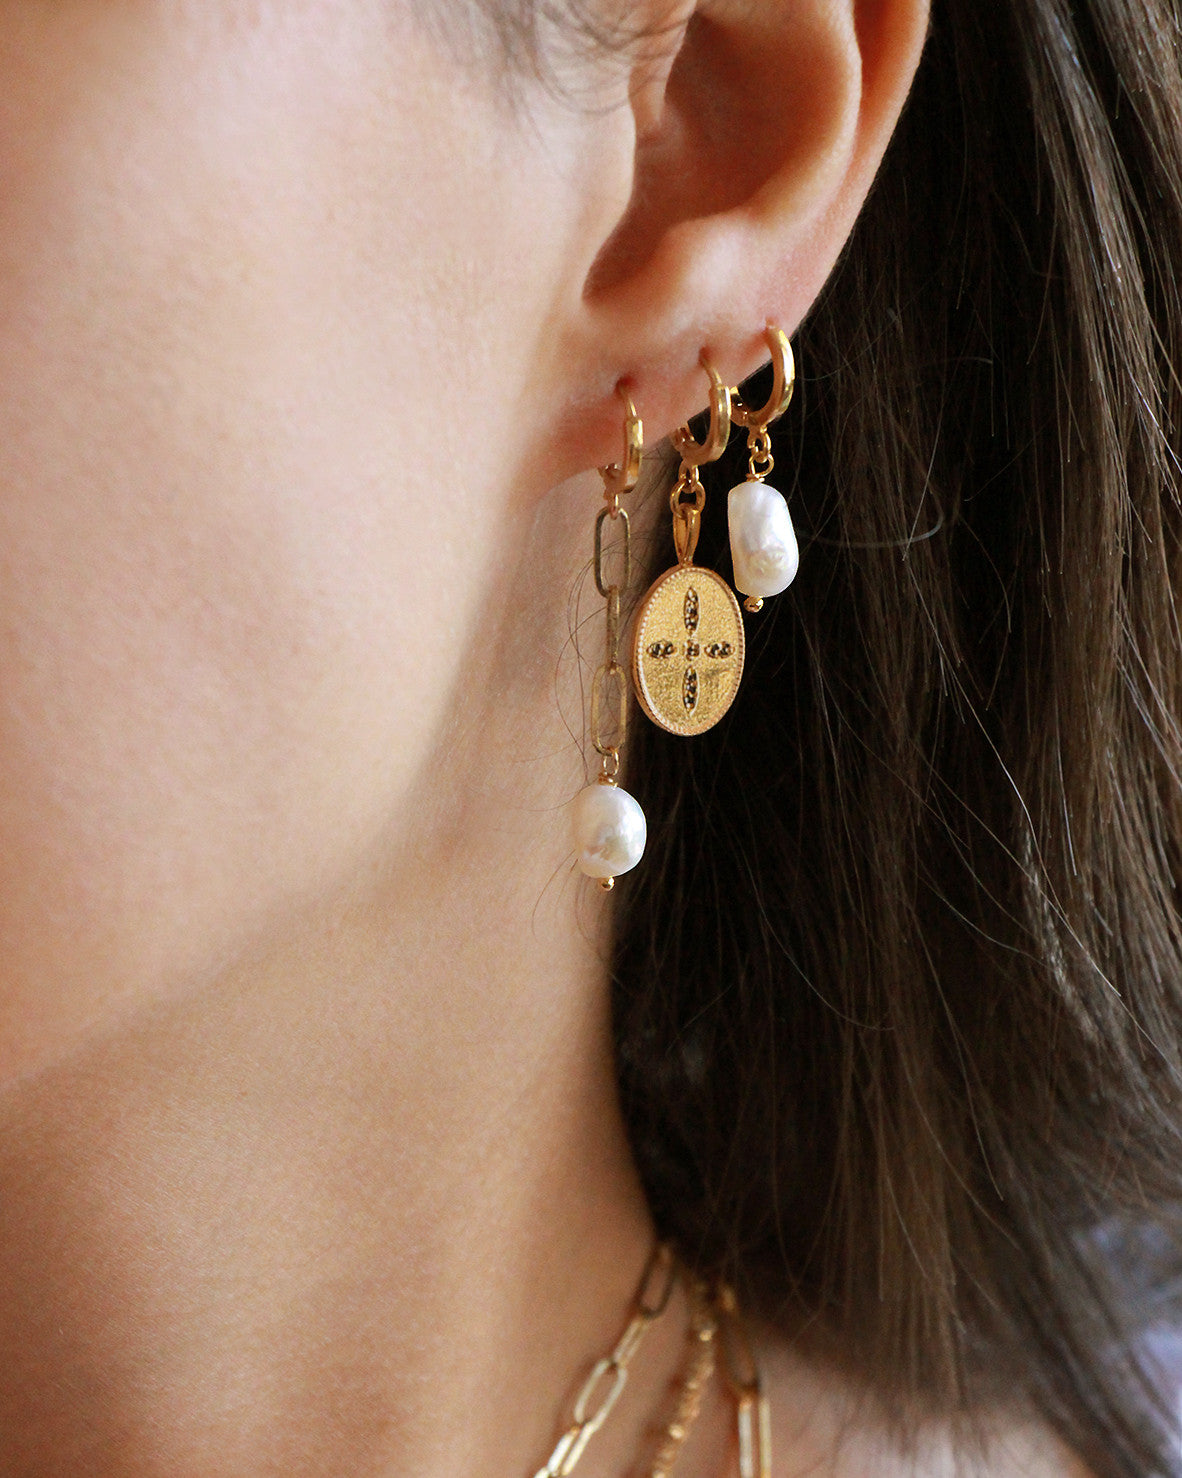 Gloria earrings